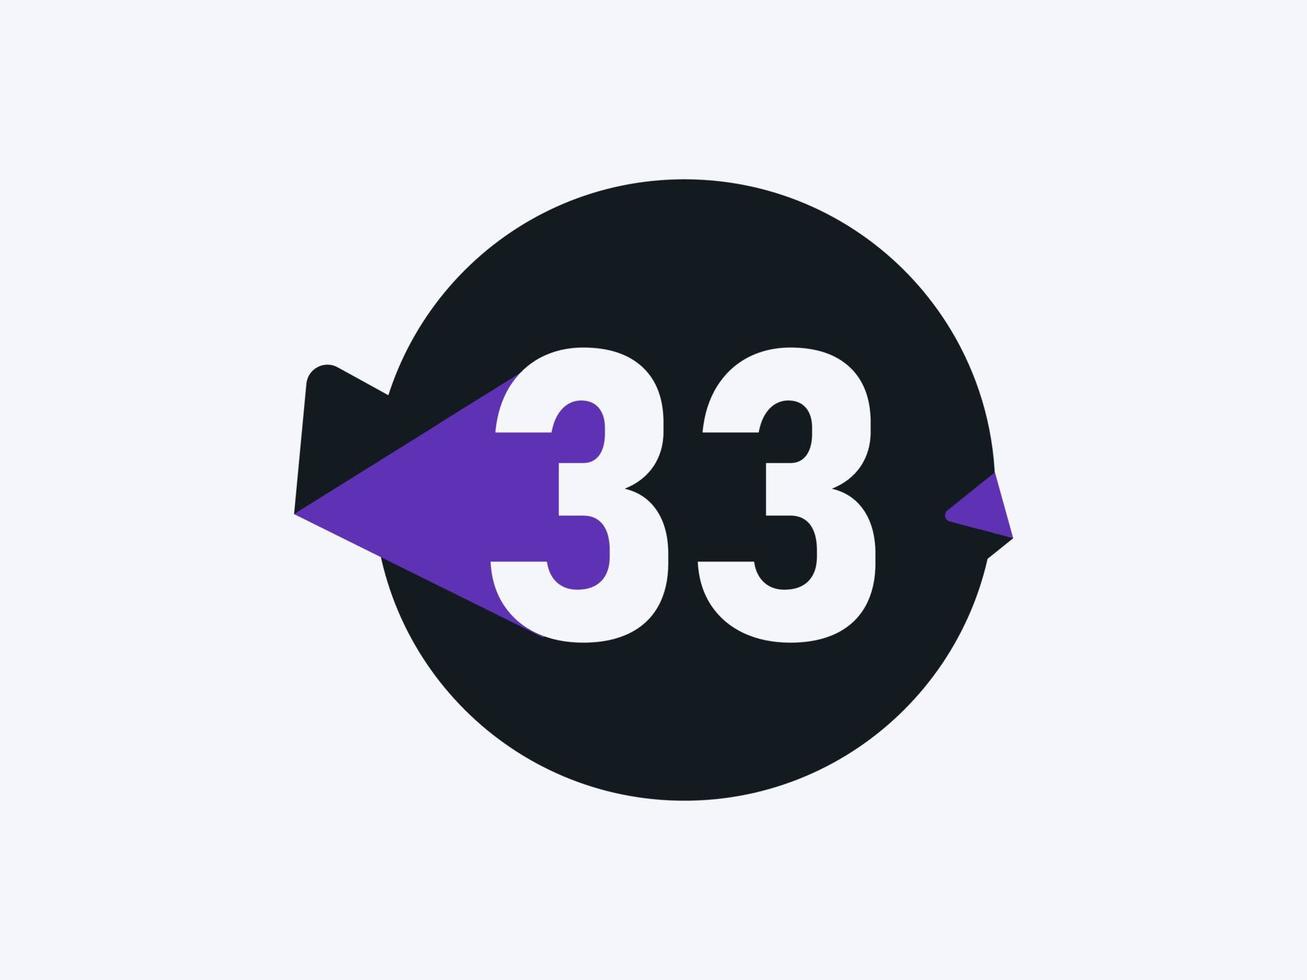 33 Number logo icon design vector image. Number logo icon design vector image